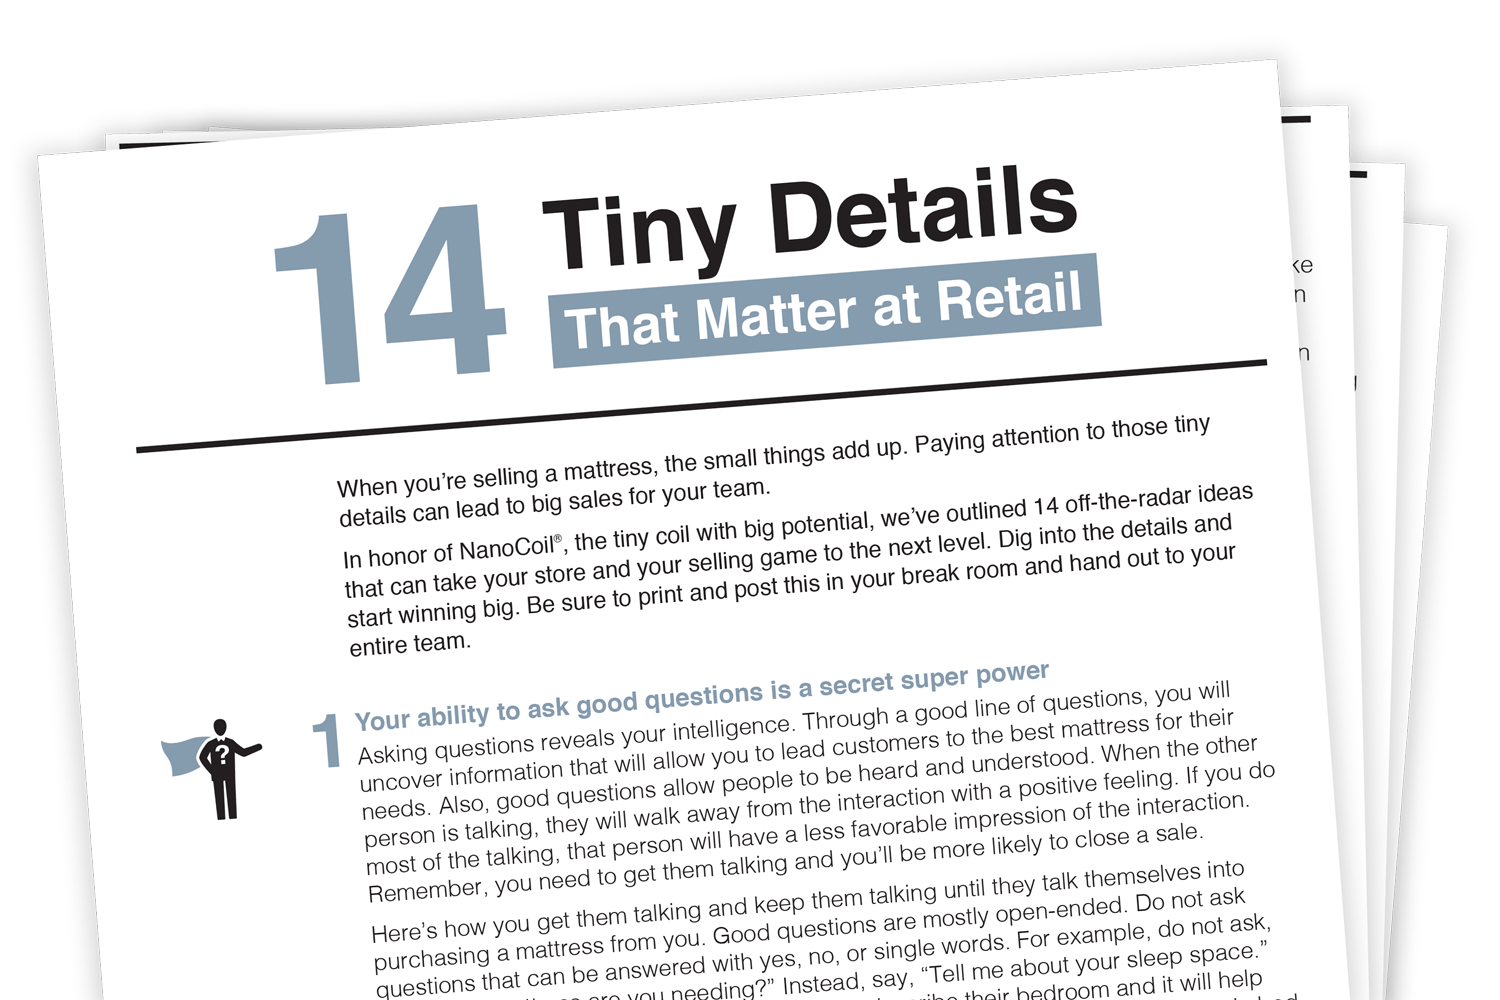 14 Tiny Details That Matter at Retail